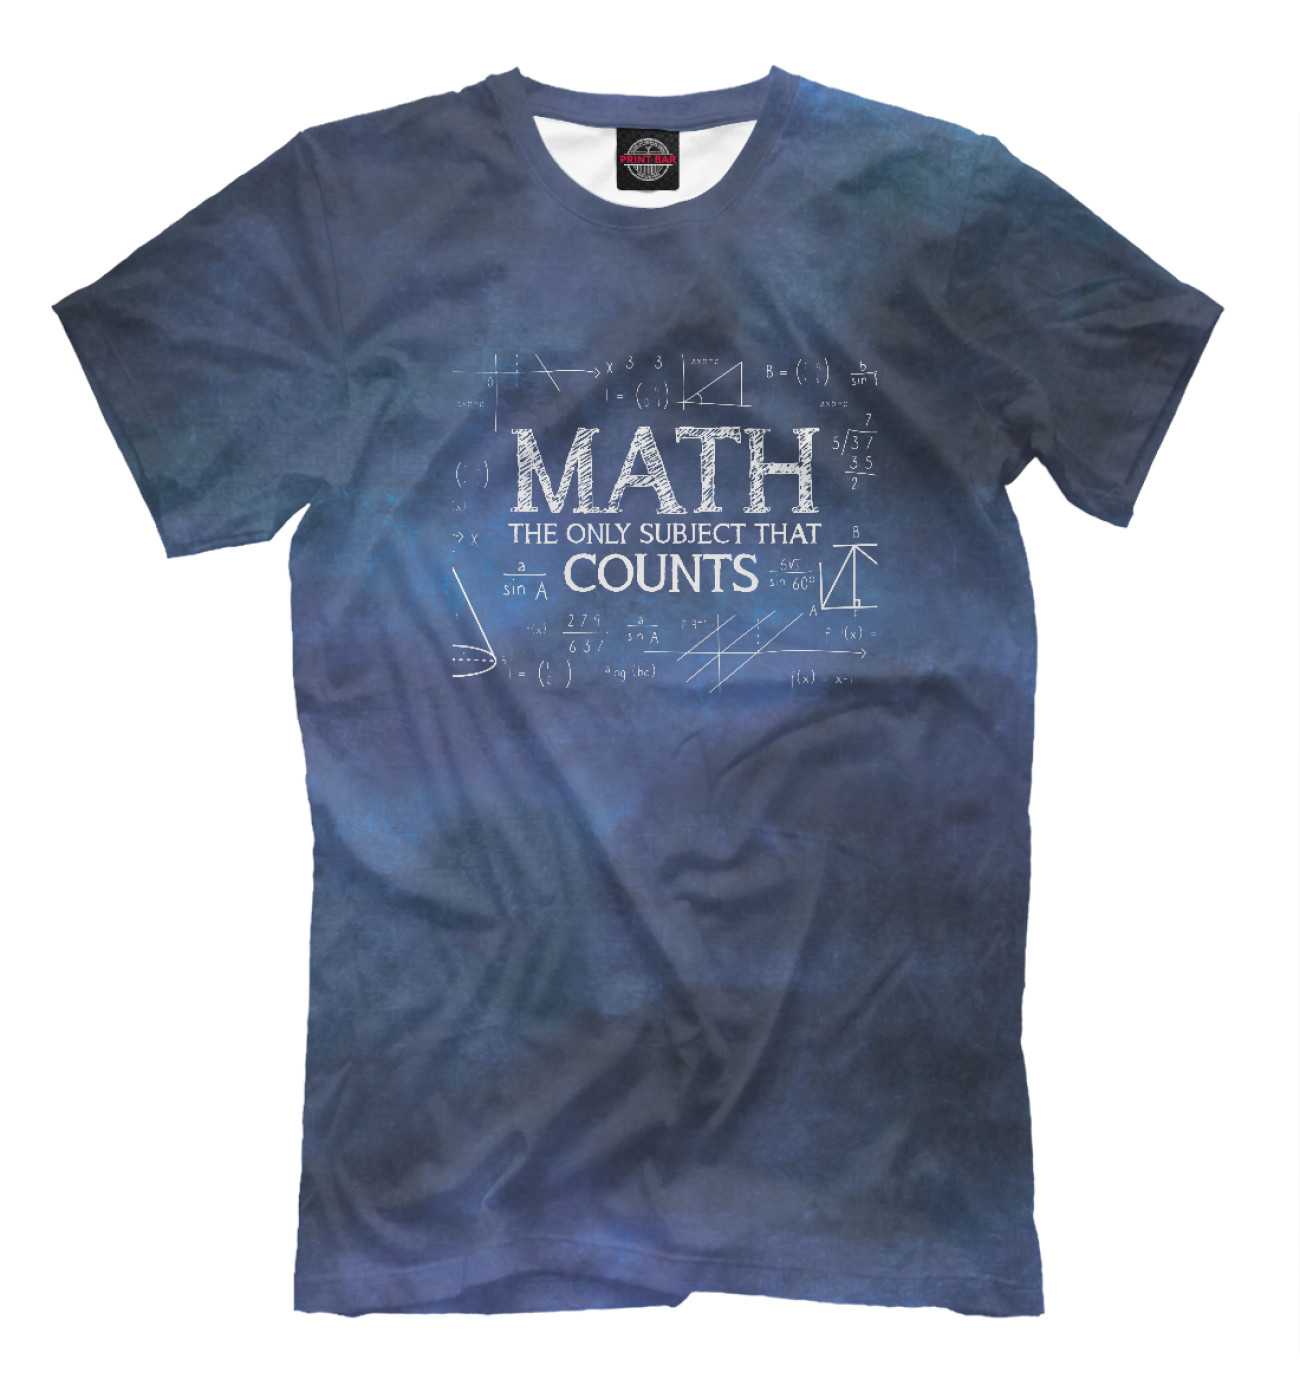 Мужская Футболка Algebra Science Geek Calcul, артикул: PRP-529963-fut-2